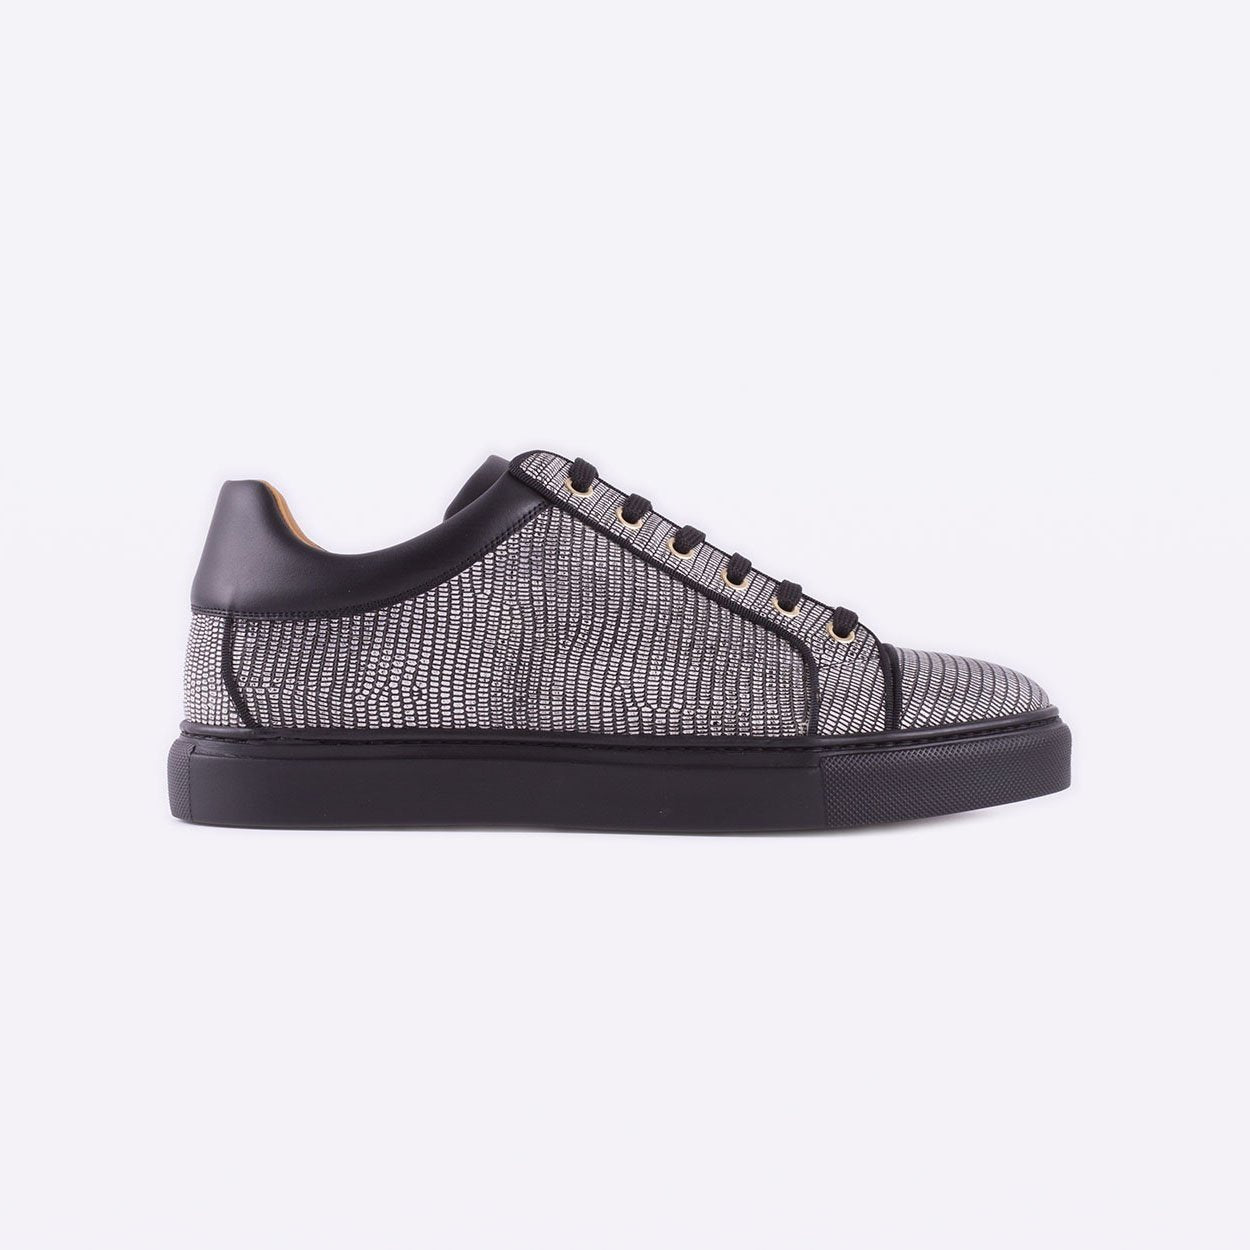 Mister 39594 Grocin Men's Shoes Gray Lizard Print / Calf-Skin Leather  Casual Sneakers (MIS1025)